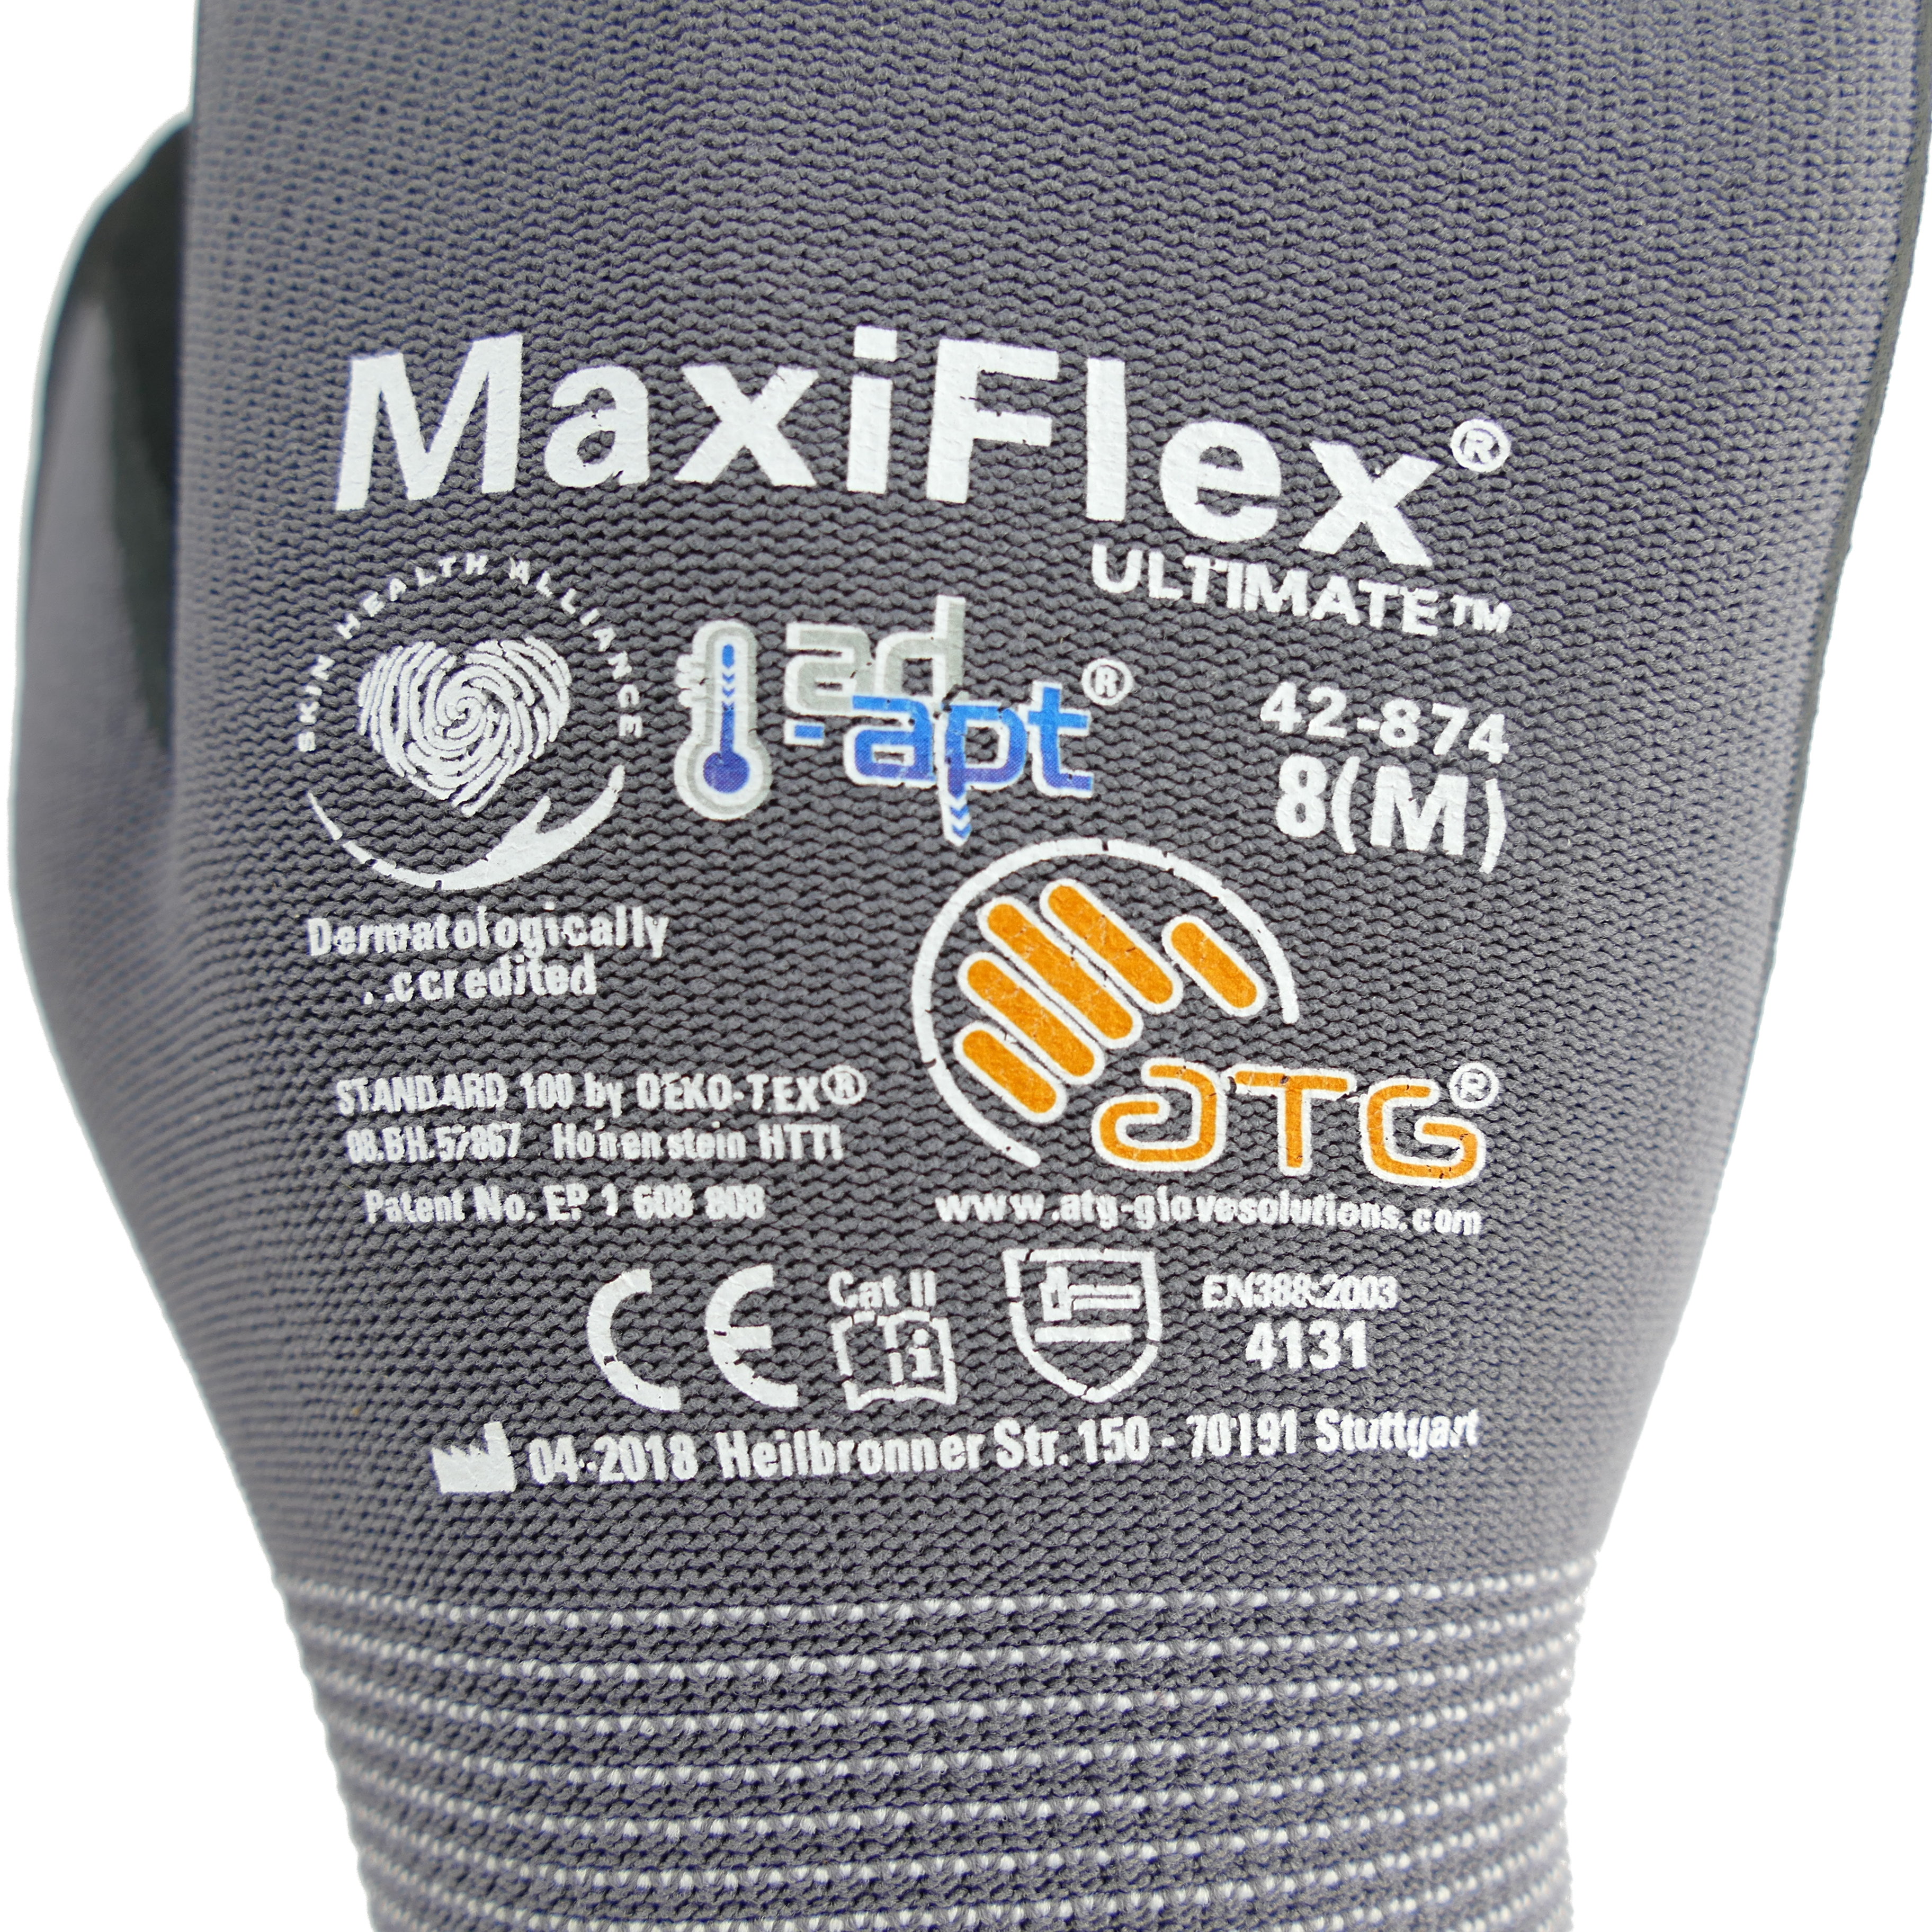 Gants MaxiFlex Ultimate AD-APT en nylon